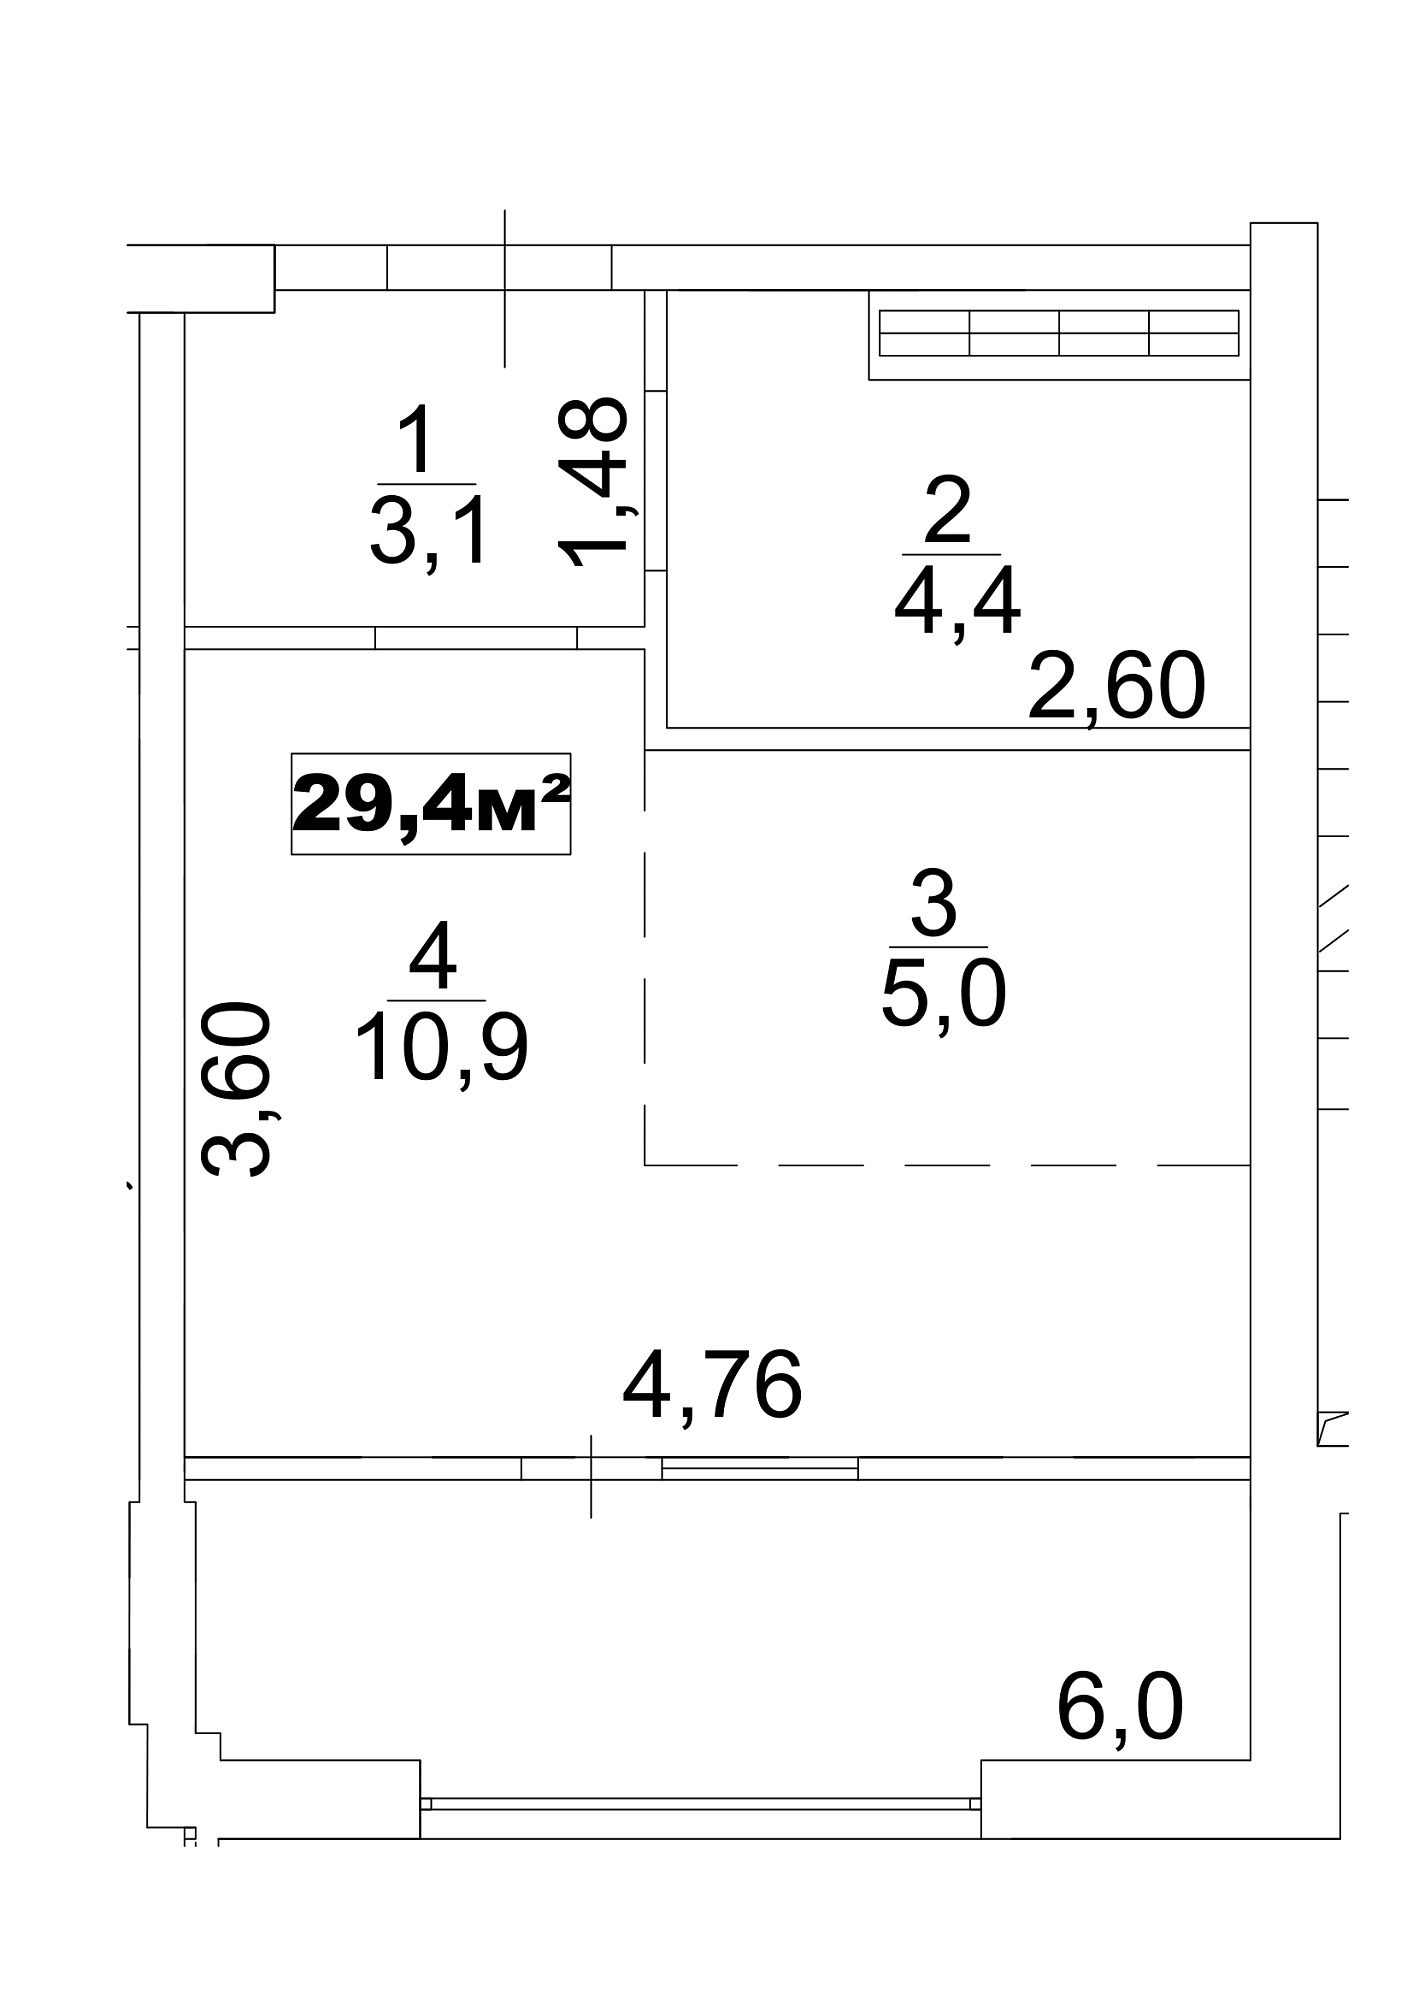 Planning Smart flats area 29.4m2, AB-13-09/0070а.